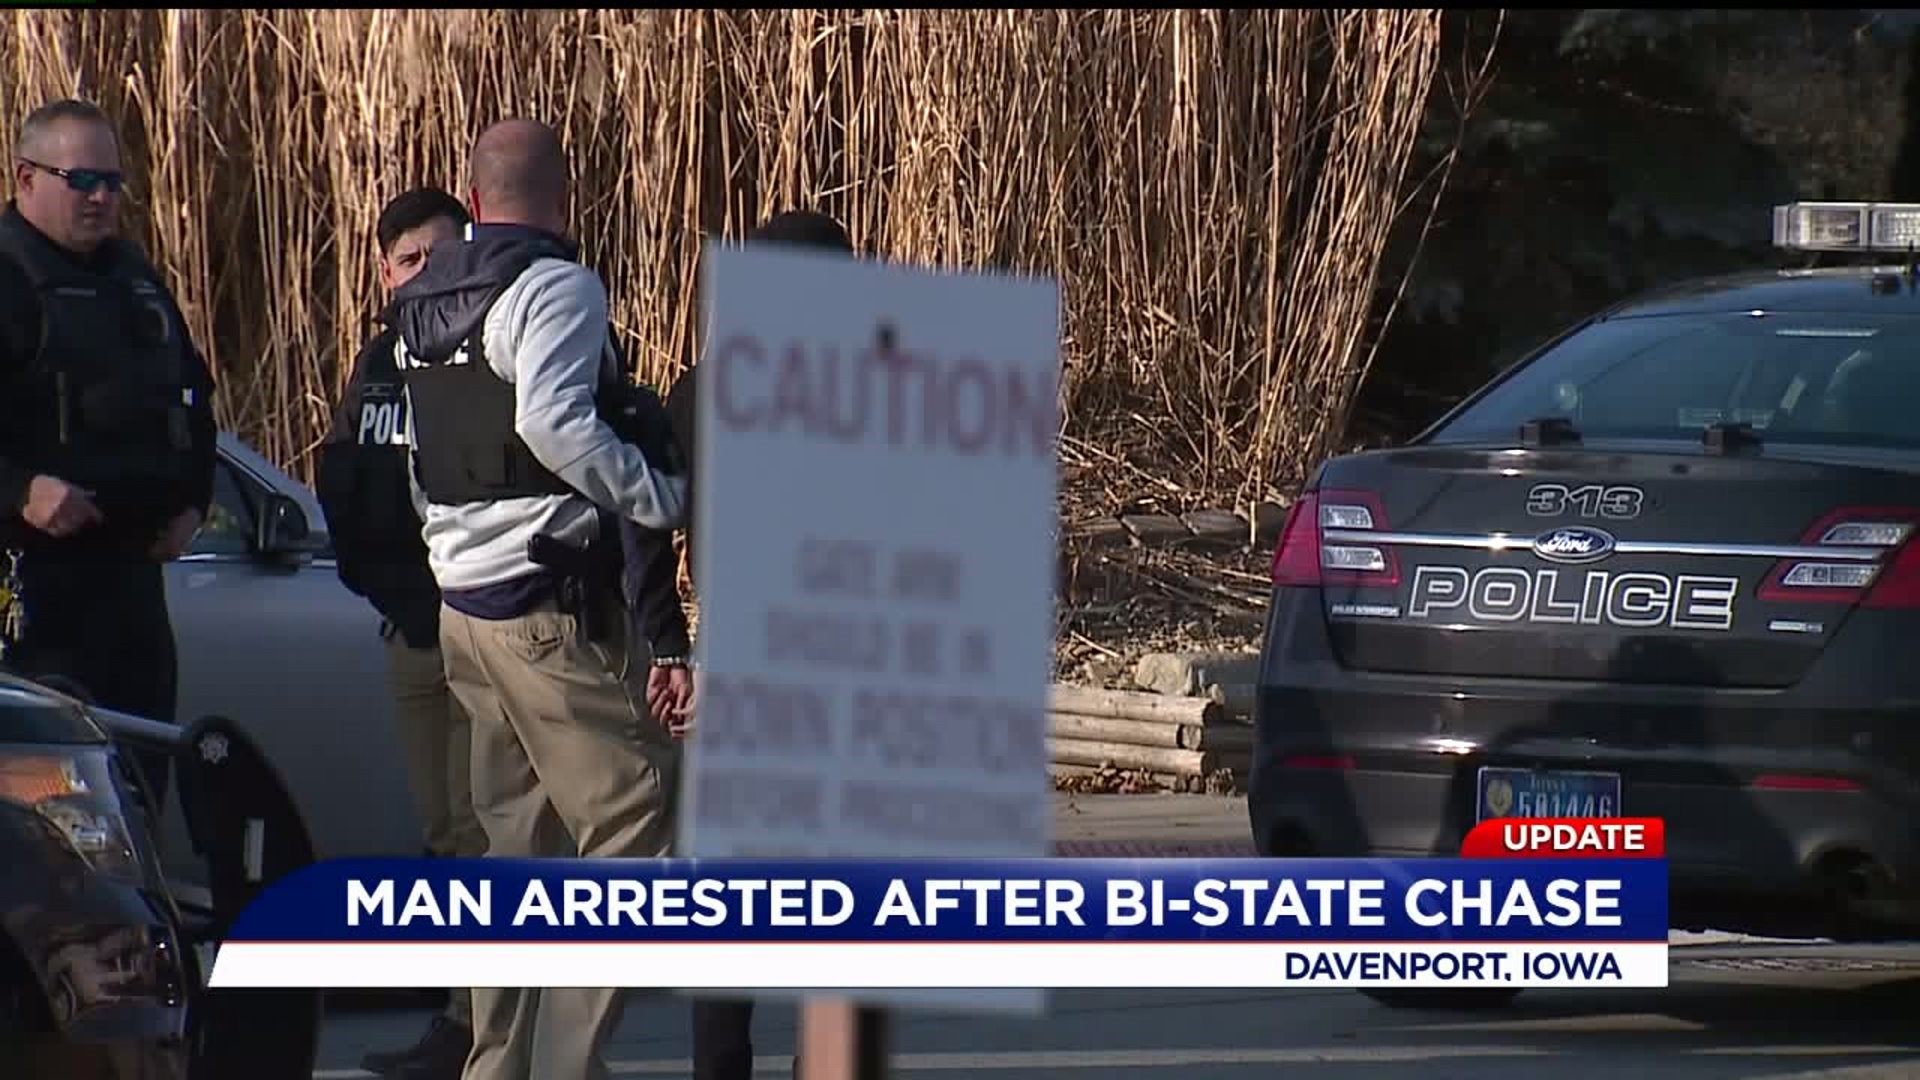 Man Arrested after Bi-state Chase